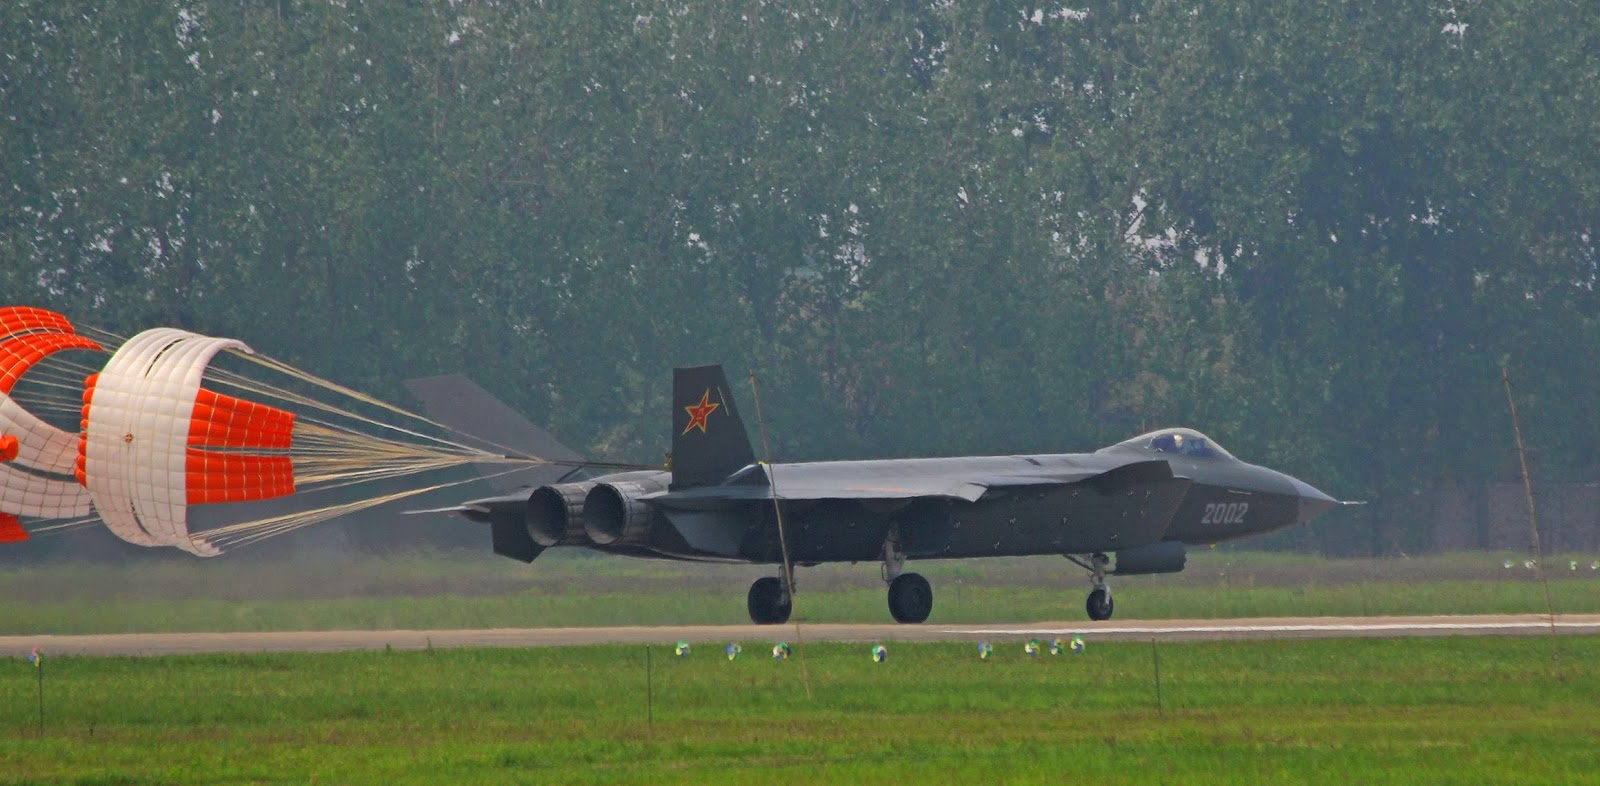 Más detalles del Chengdu J-20 - Página 12 J-20+20023456J-20+2004+-+25.9.13+J-20+20023456789+-+open+MAIN+SIDE+bay+2+PL-12+PL-10+PL-15+J-20+Mighty+Dragon++Chengdu+J-20+fifth+generation+stealth,+engine+fighter+People's+Liberation+Army+Air+Force+(3)